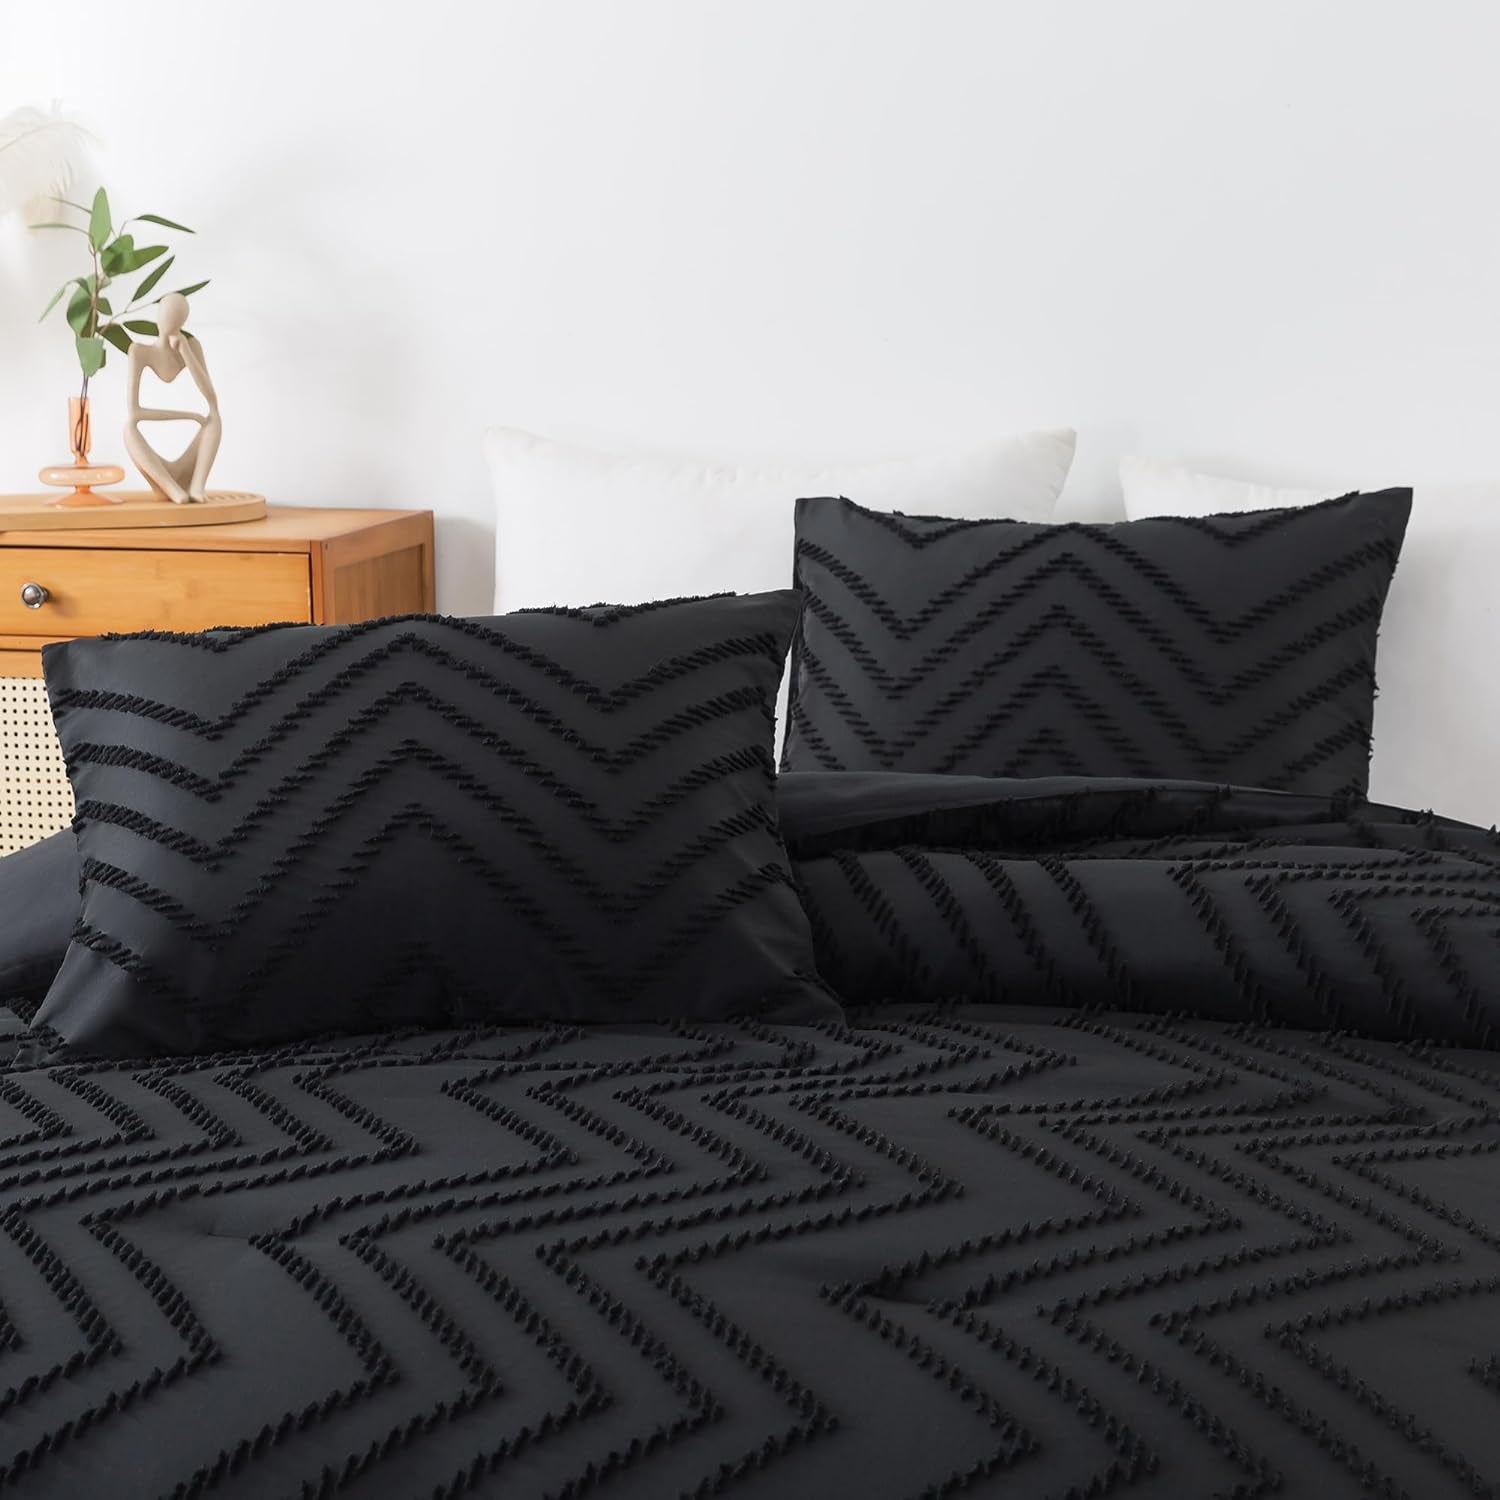 Black Comforter Full Size, Boho Soft Fluffy Warm Lightweight Bedding Comforter Sets for Full Bed, 3 Pieces Chevron Tufted Aesthetic Microfiber Lightweight Comforter Set